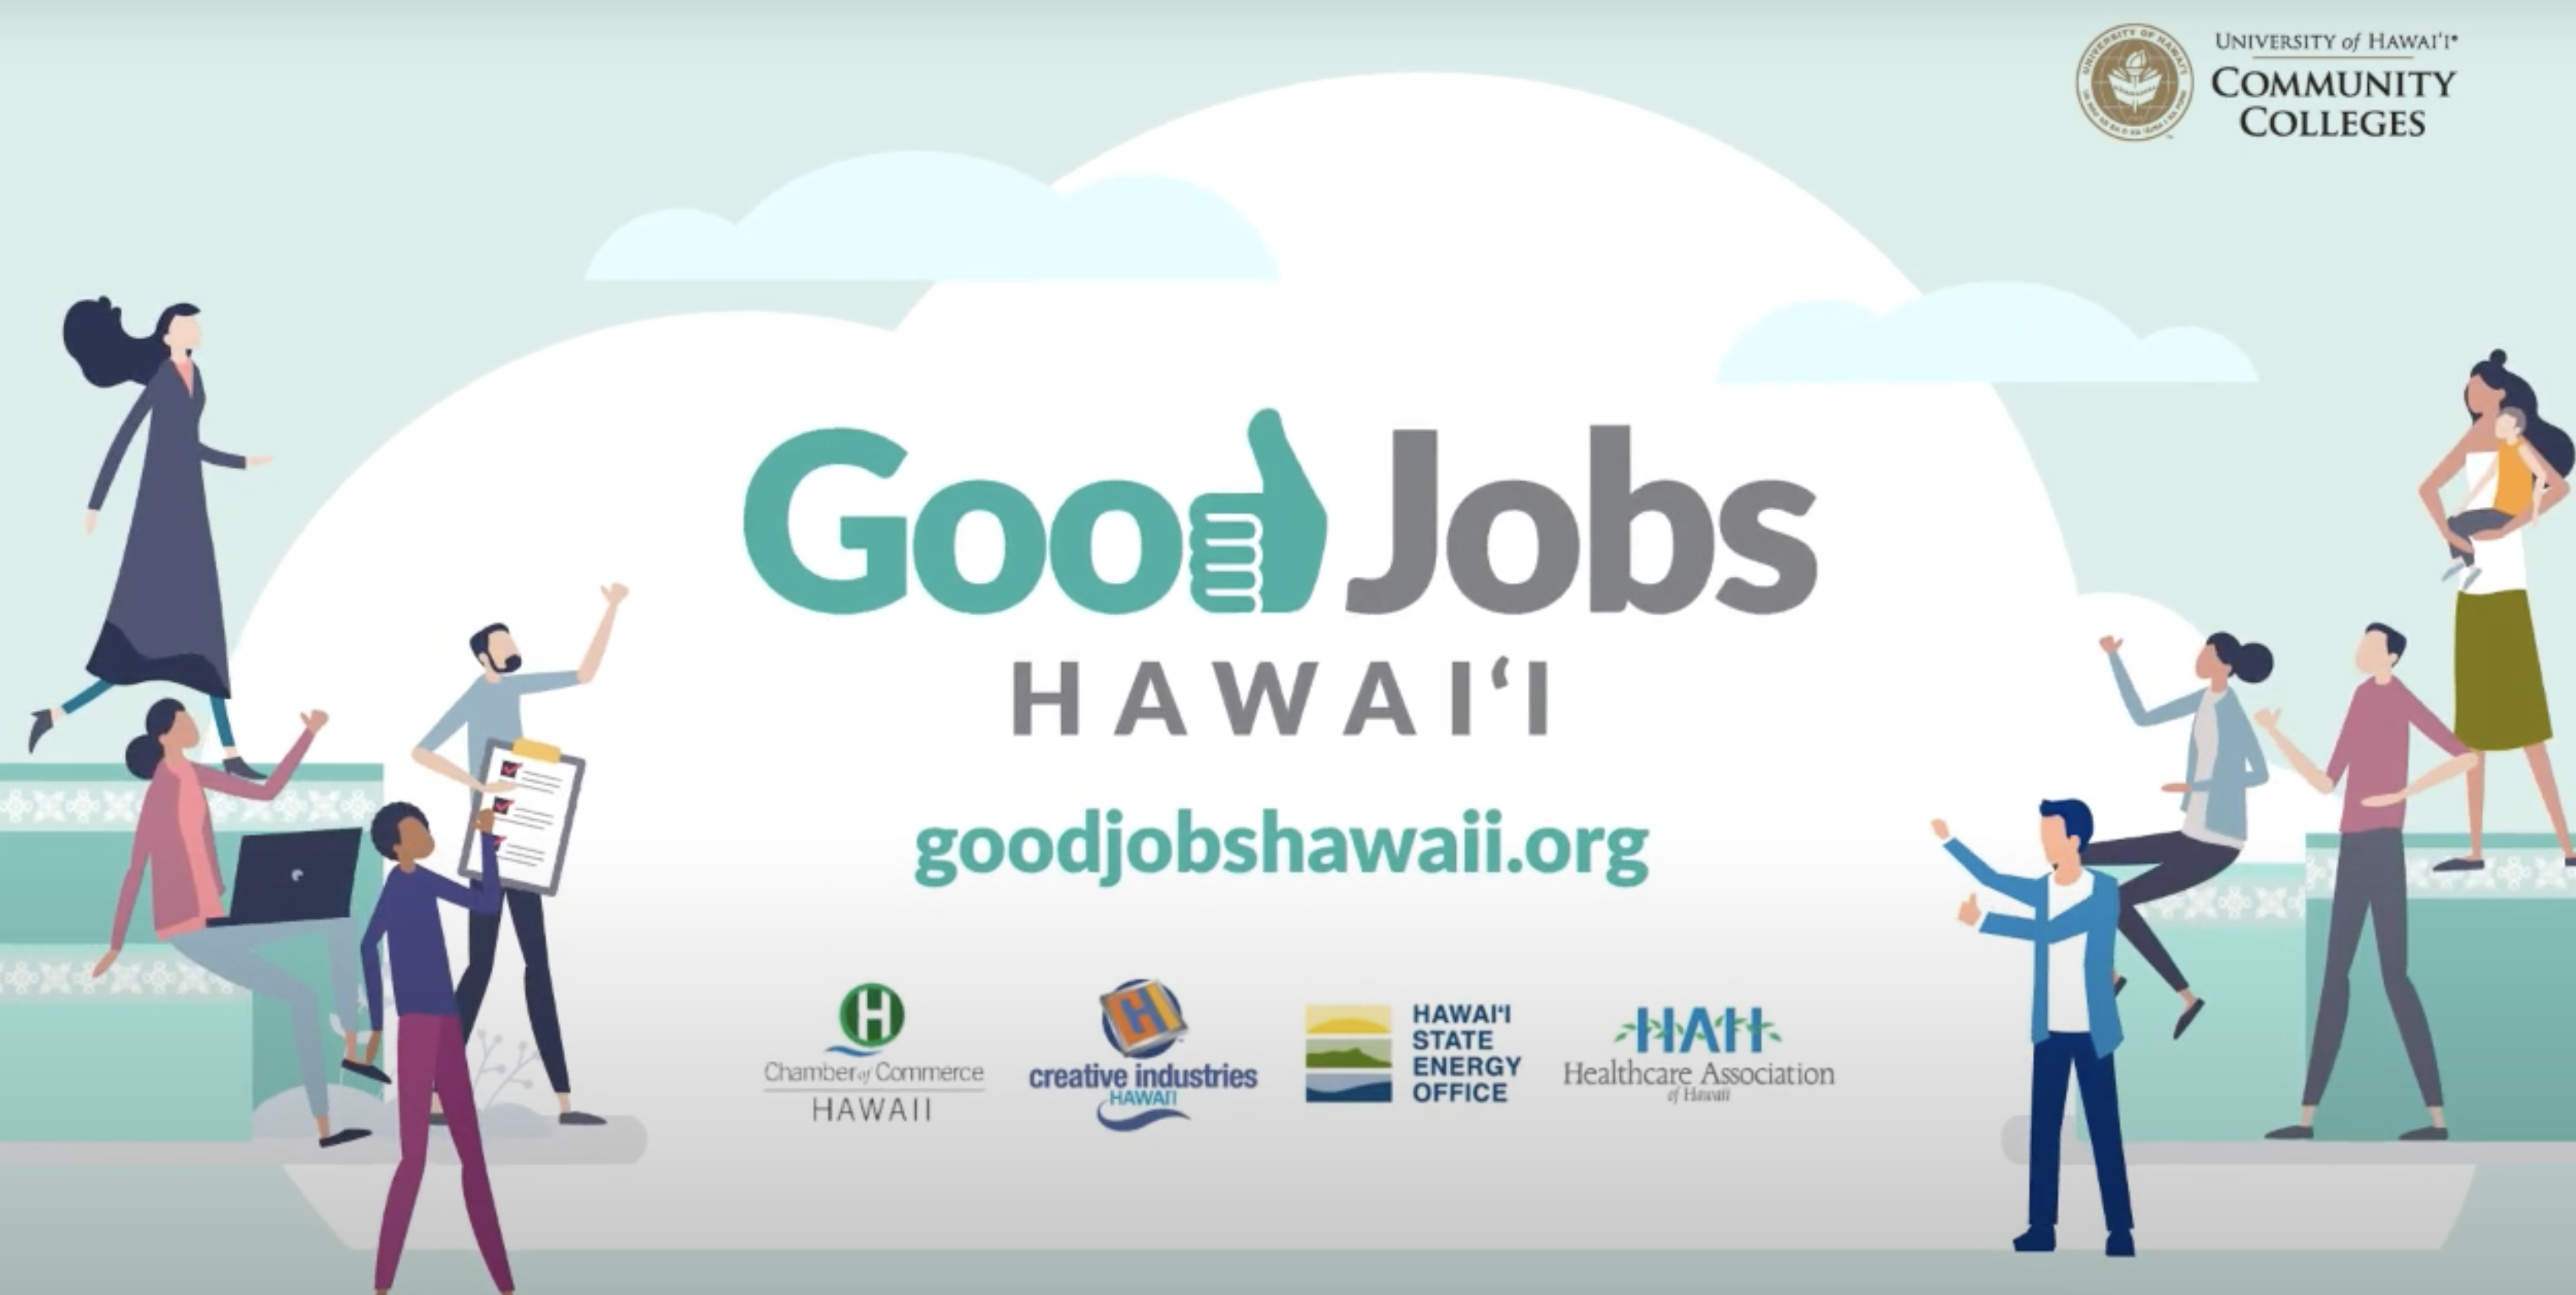 Illustration of Good Jobs logo and sponsor logos.